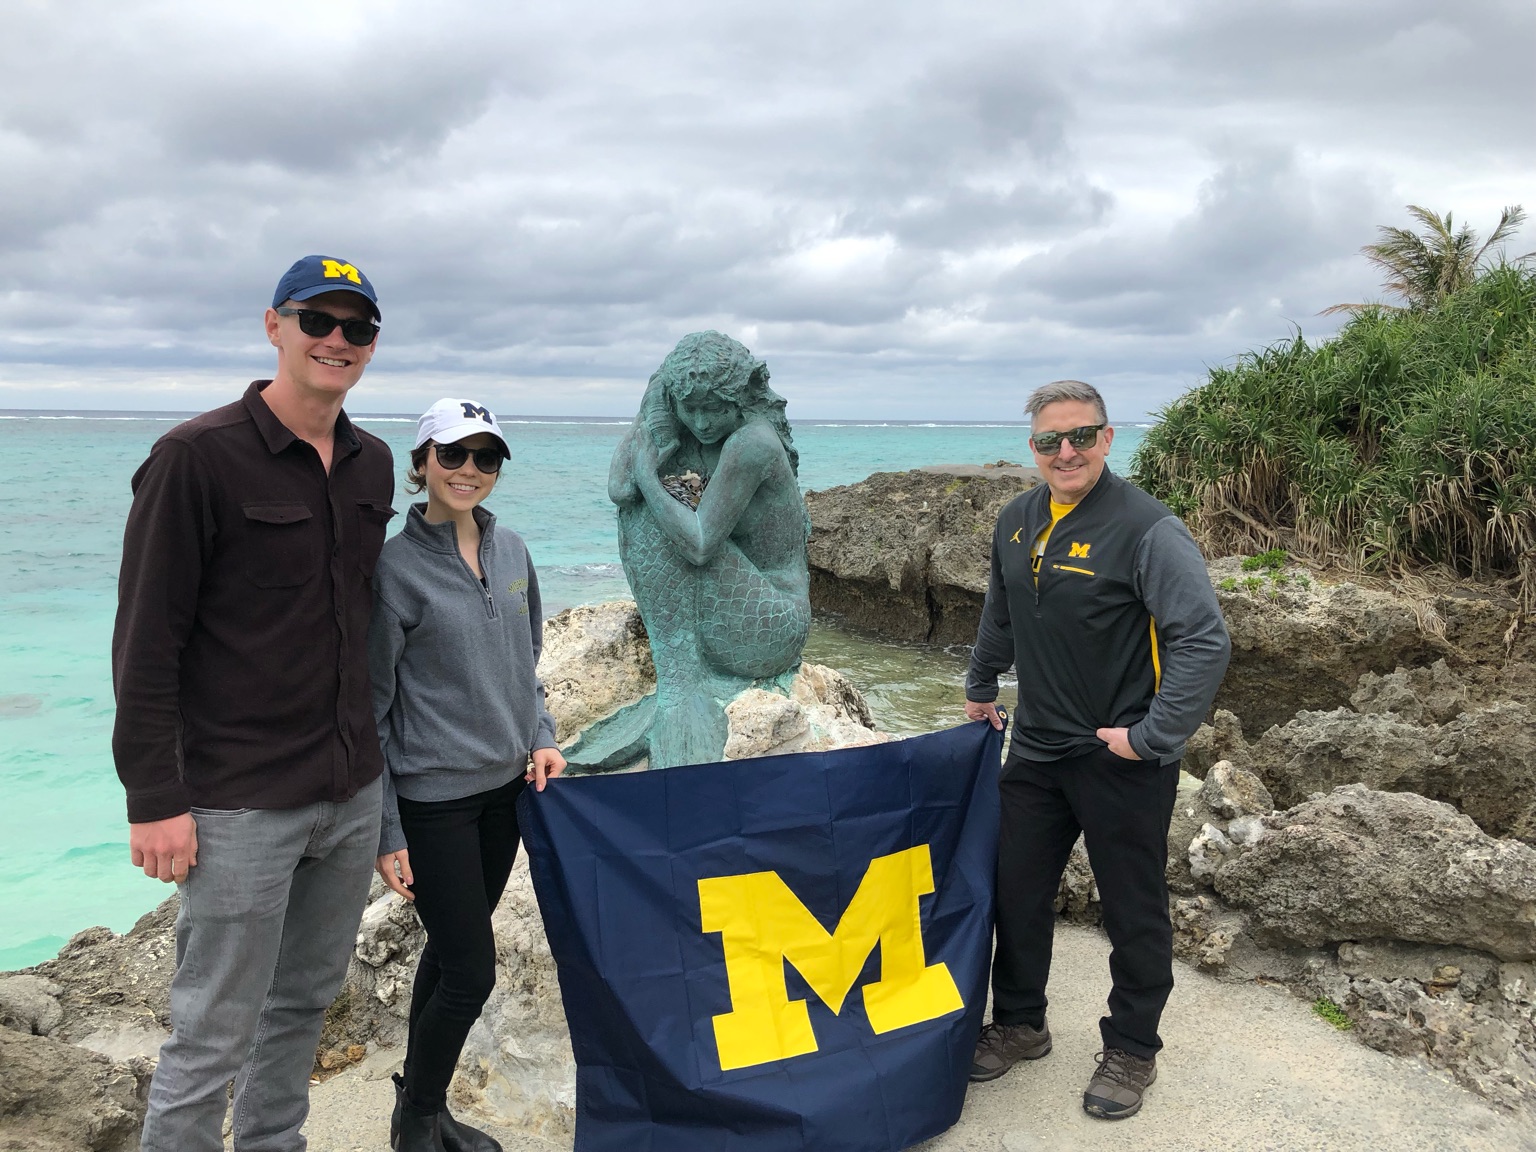 Chris Harkey, ’83, MSE’90, Paulina Singer, ’16, and Jacob Singer, ’16, waved the Michigan banner at the mermaid statue of Moon Beach on Okinawa Island, Japan.